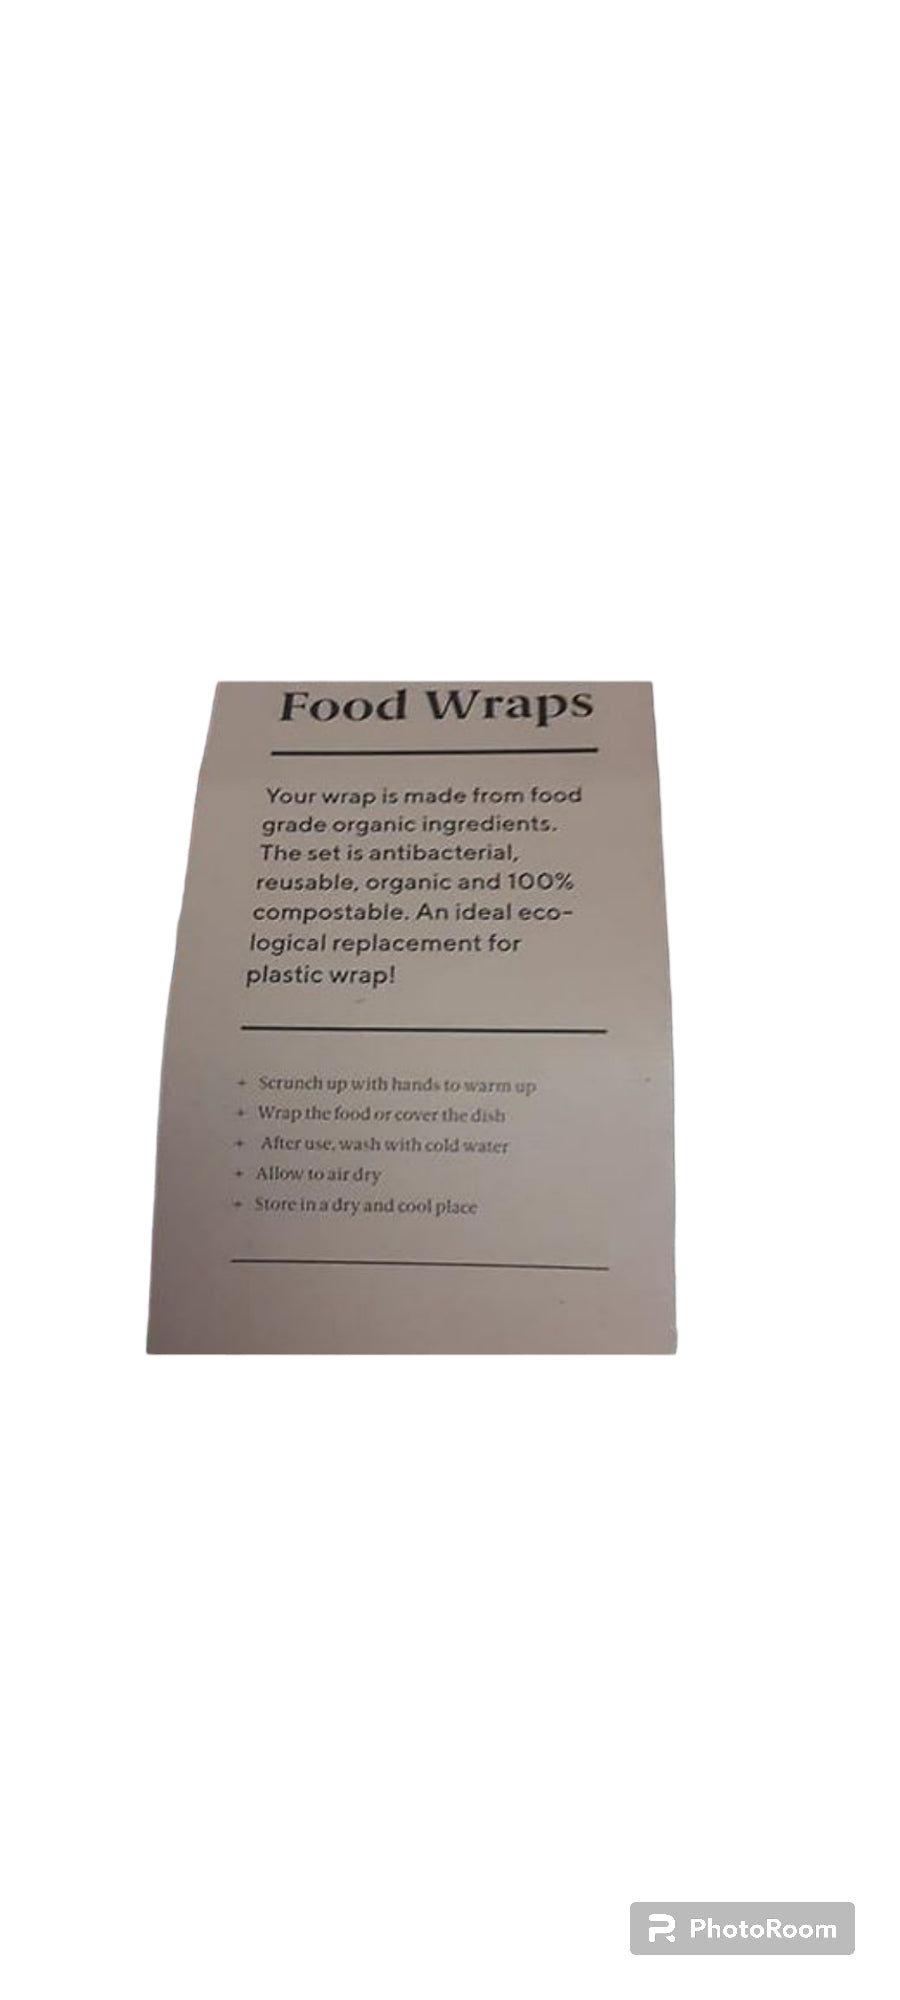 Reusable Food Wraps